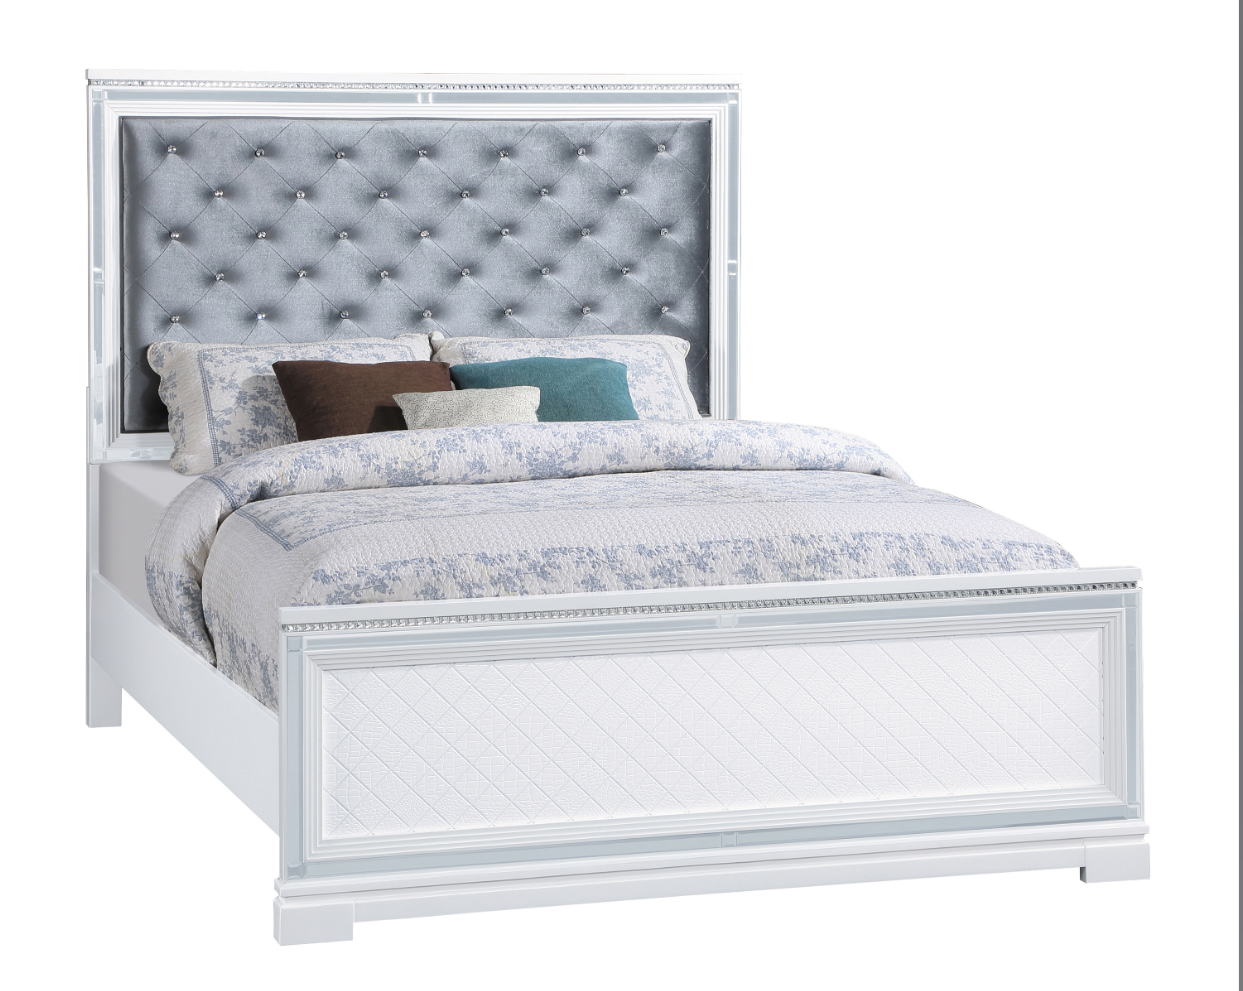 Eleanor Queen Size Glam Bedroom Set - White